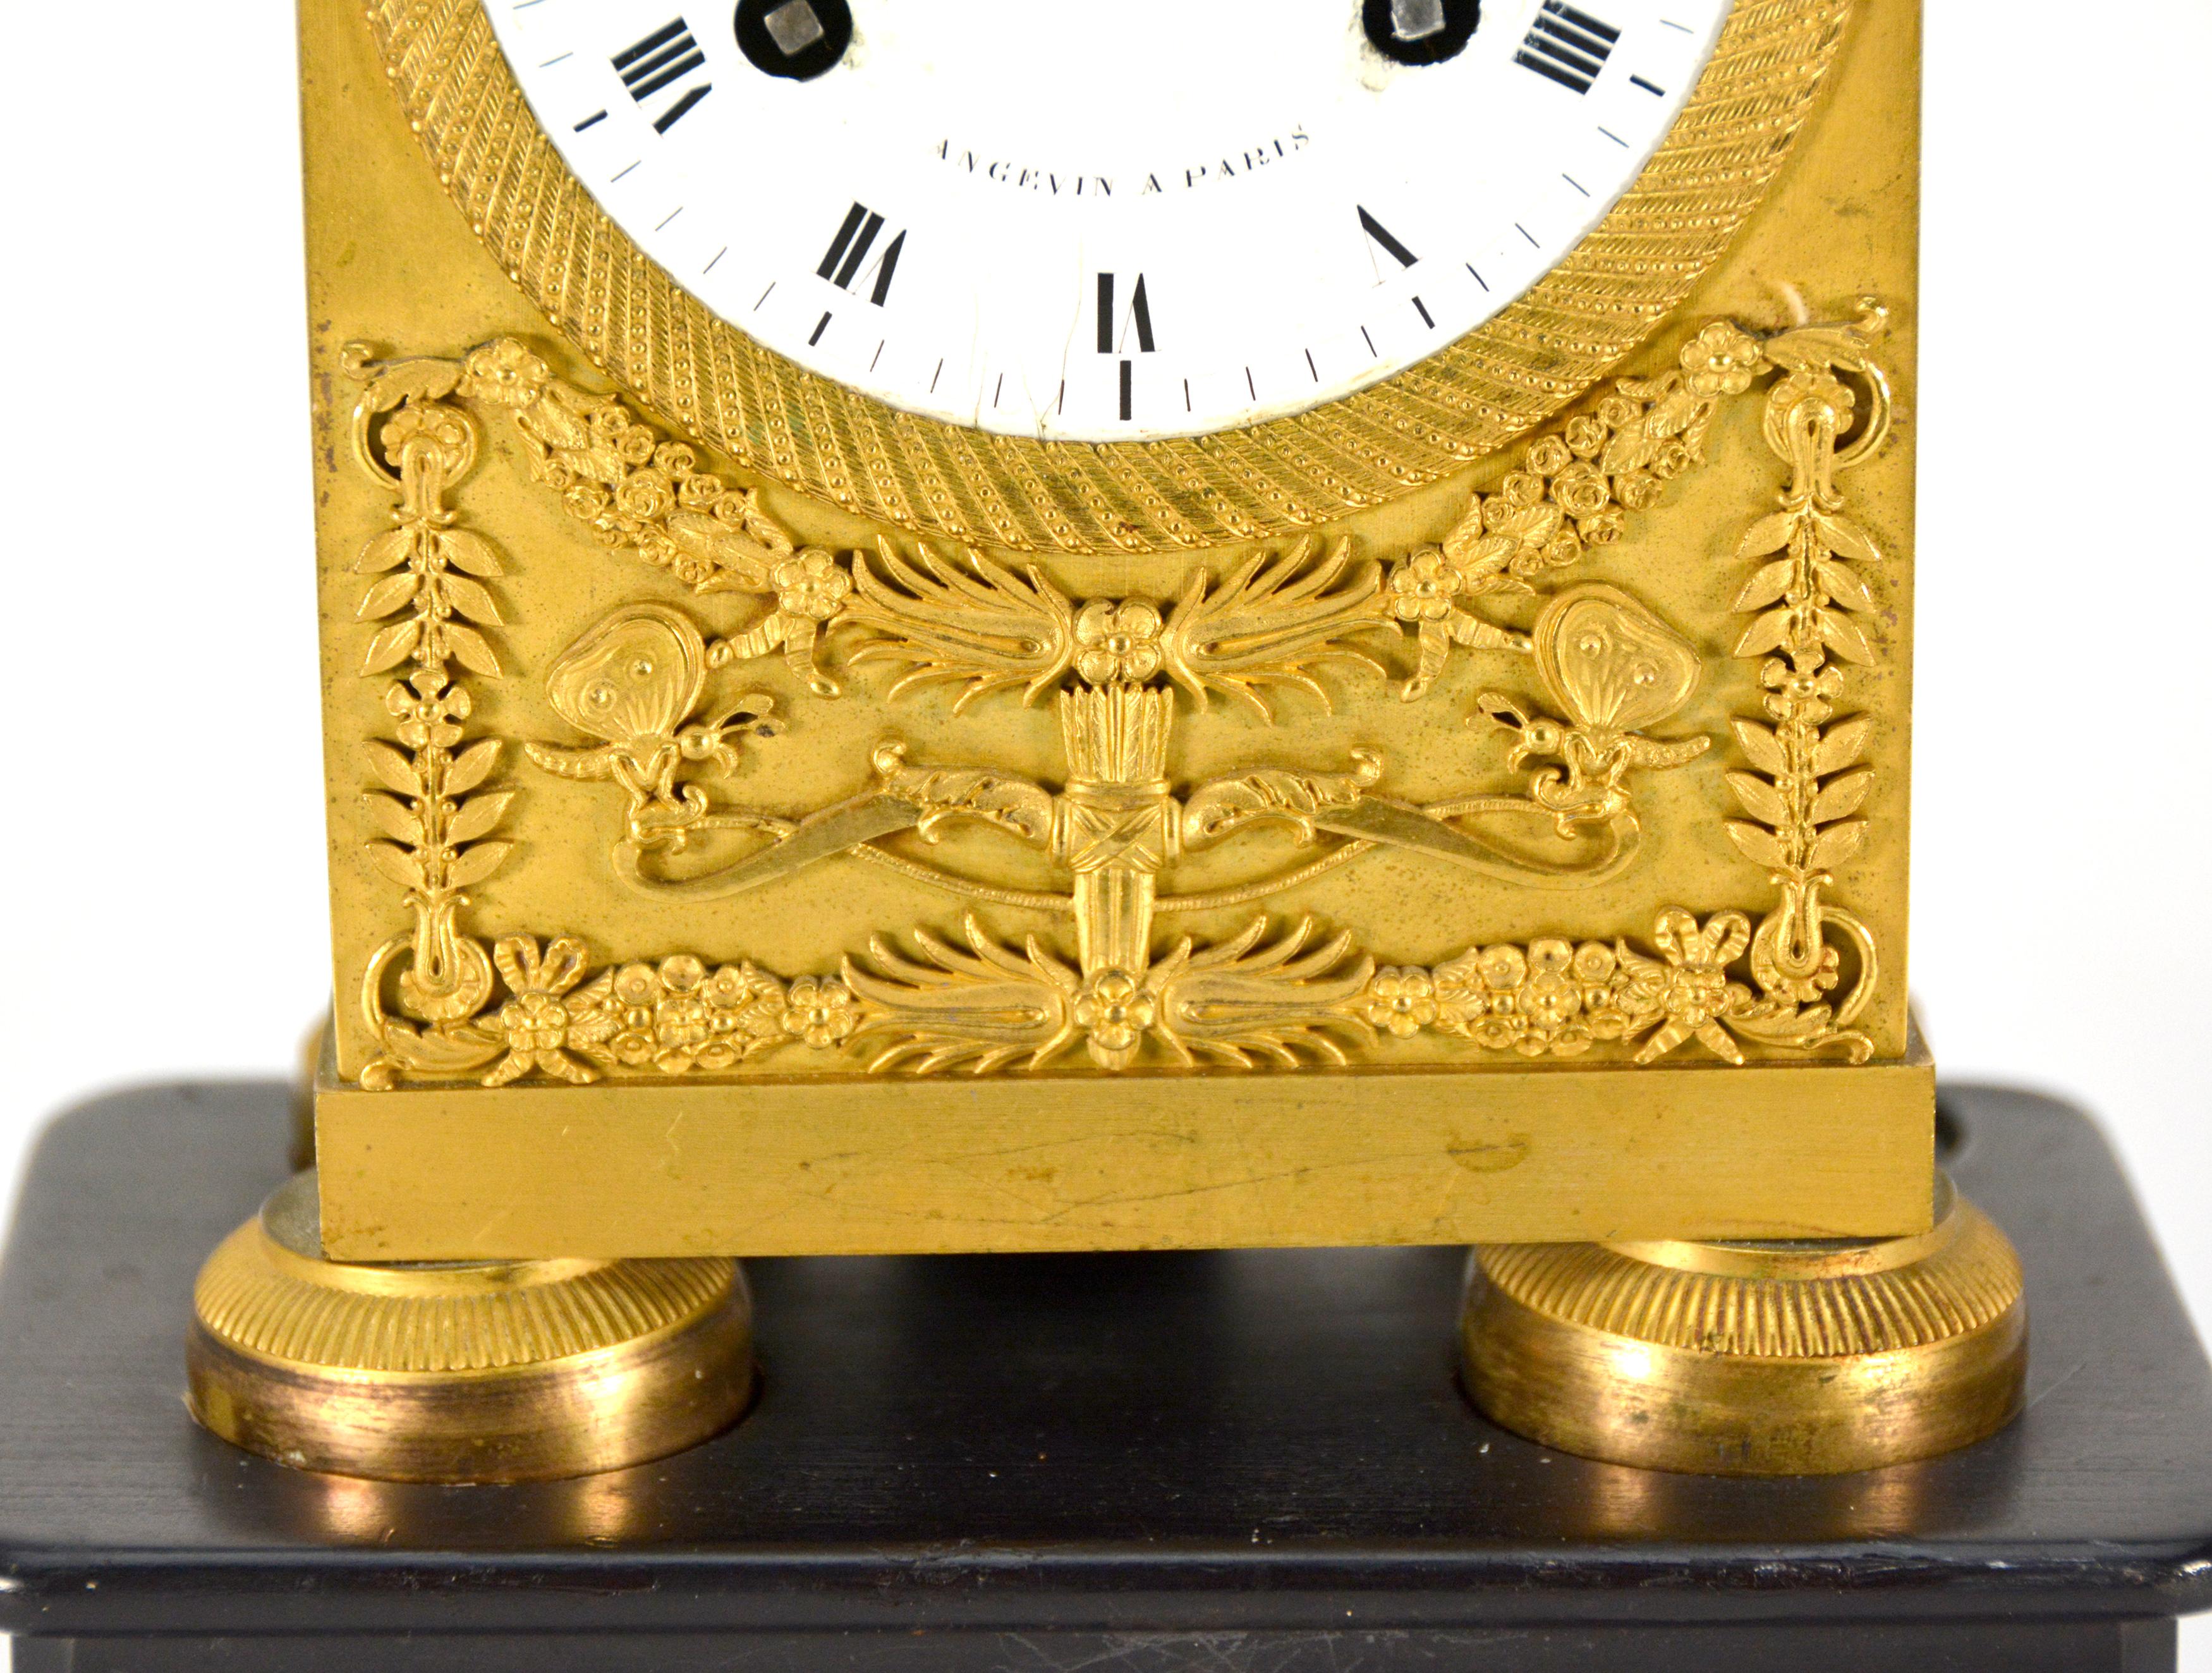 1880 French Silk Suspension Ormolu Empire Bronze Mantel Clock by Angevin A Paris For Sale 8